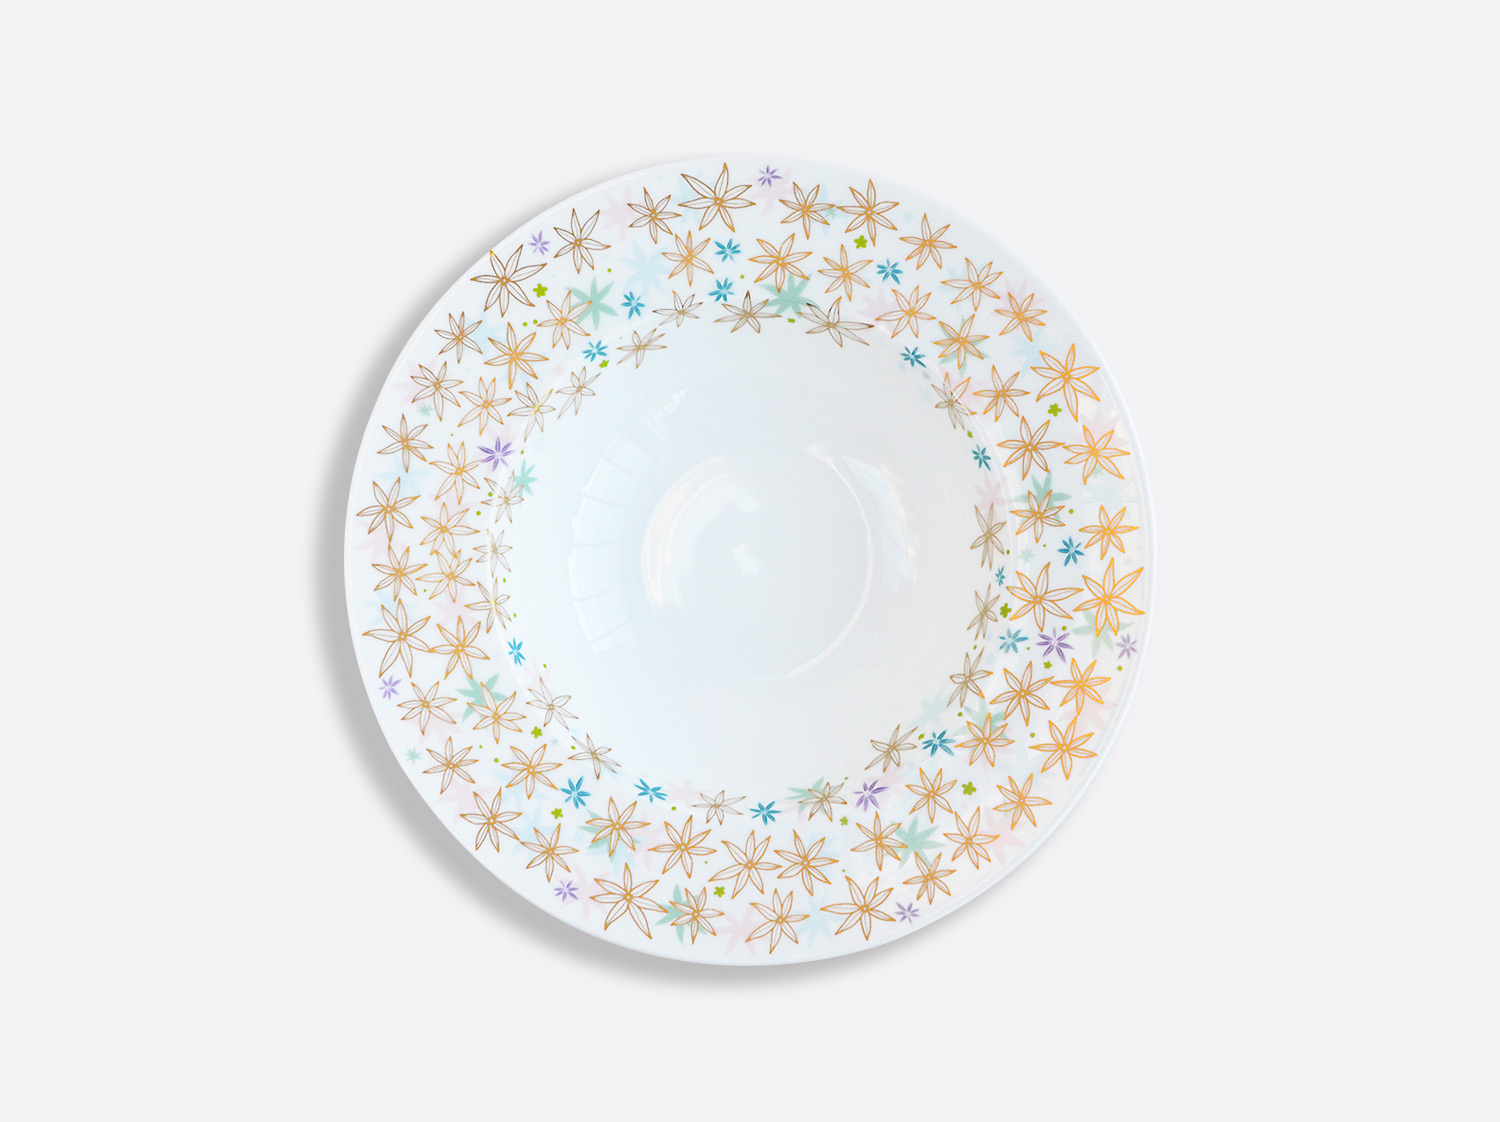 China Rim soup plate of the collection FÉERIE - MICHAËL CAILLOUX | Bernardaud